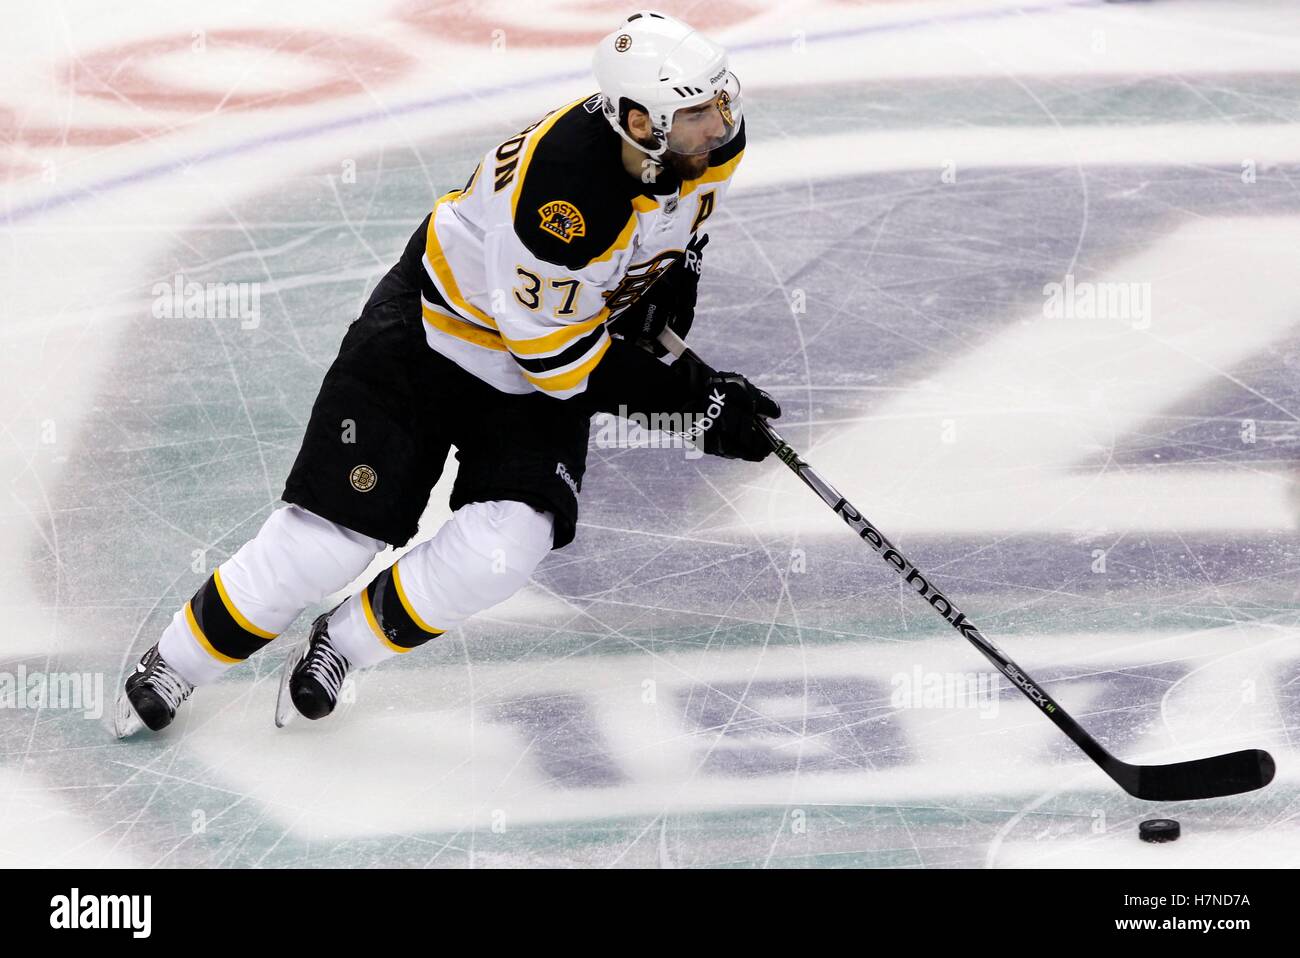 Buy Boston Bruins 2010 Stanley Cup Jersey - Patrice Bergeron Men's